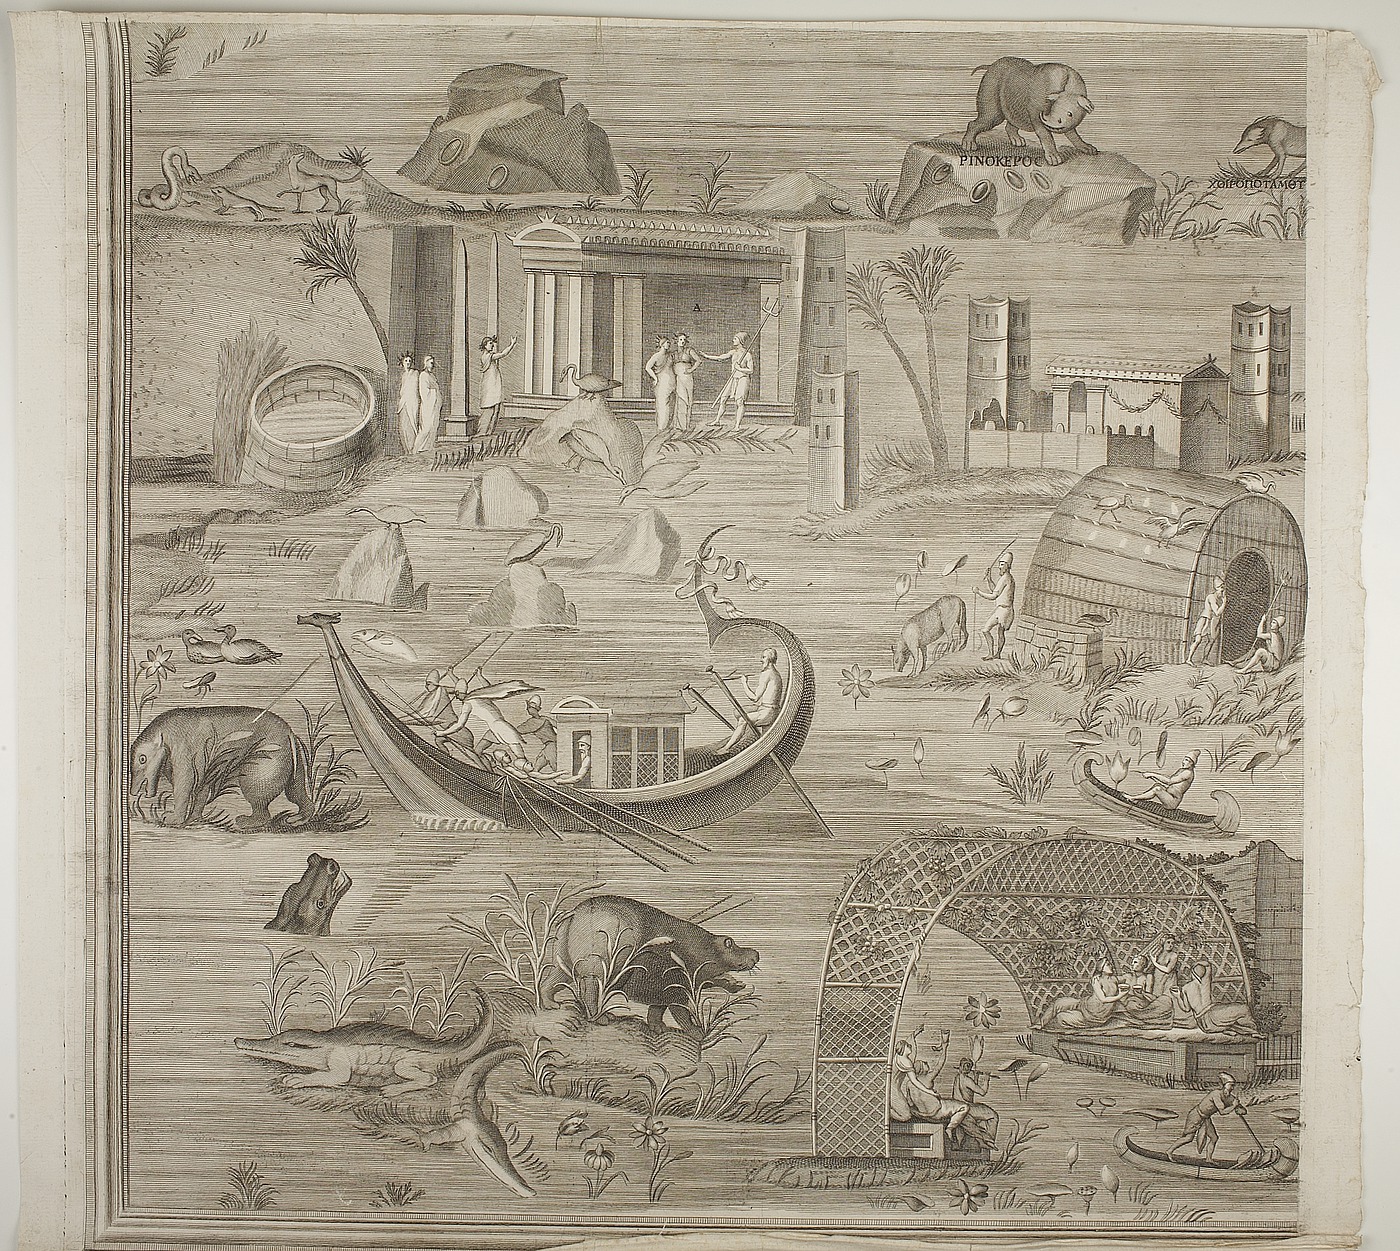 Nil-mosaikkerne også kendt som Barberini-mosaikken, detalje